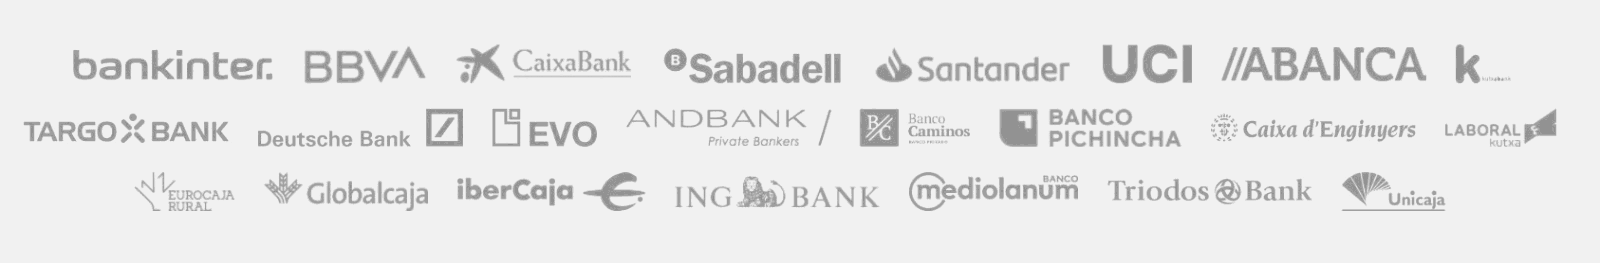 logos_bancos